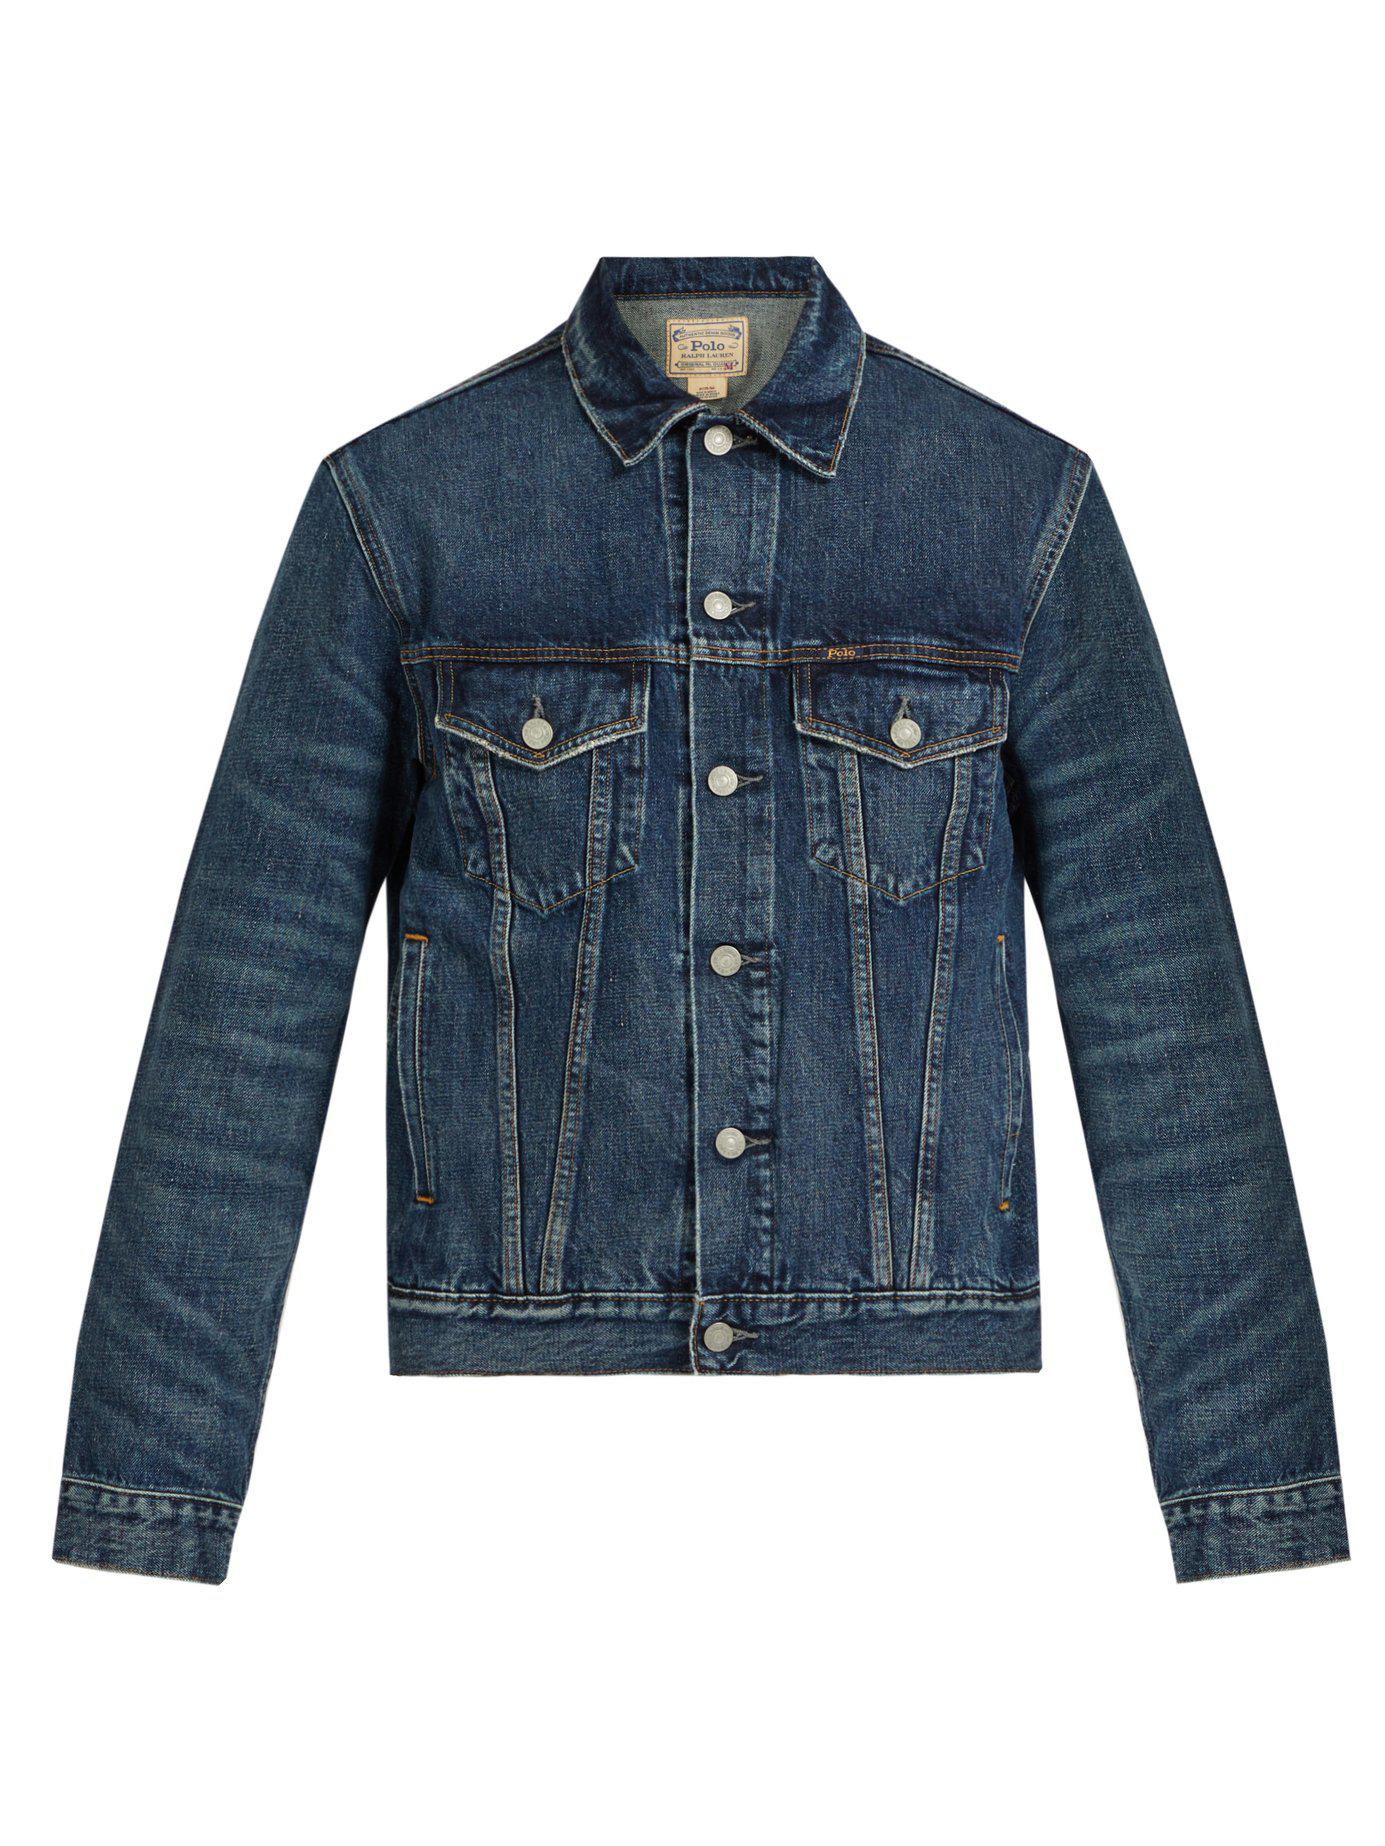 Polo Ralph Lauren Washed Denim Jacket in Blue for Men - Lyst